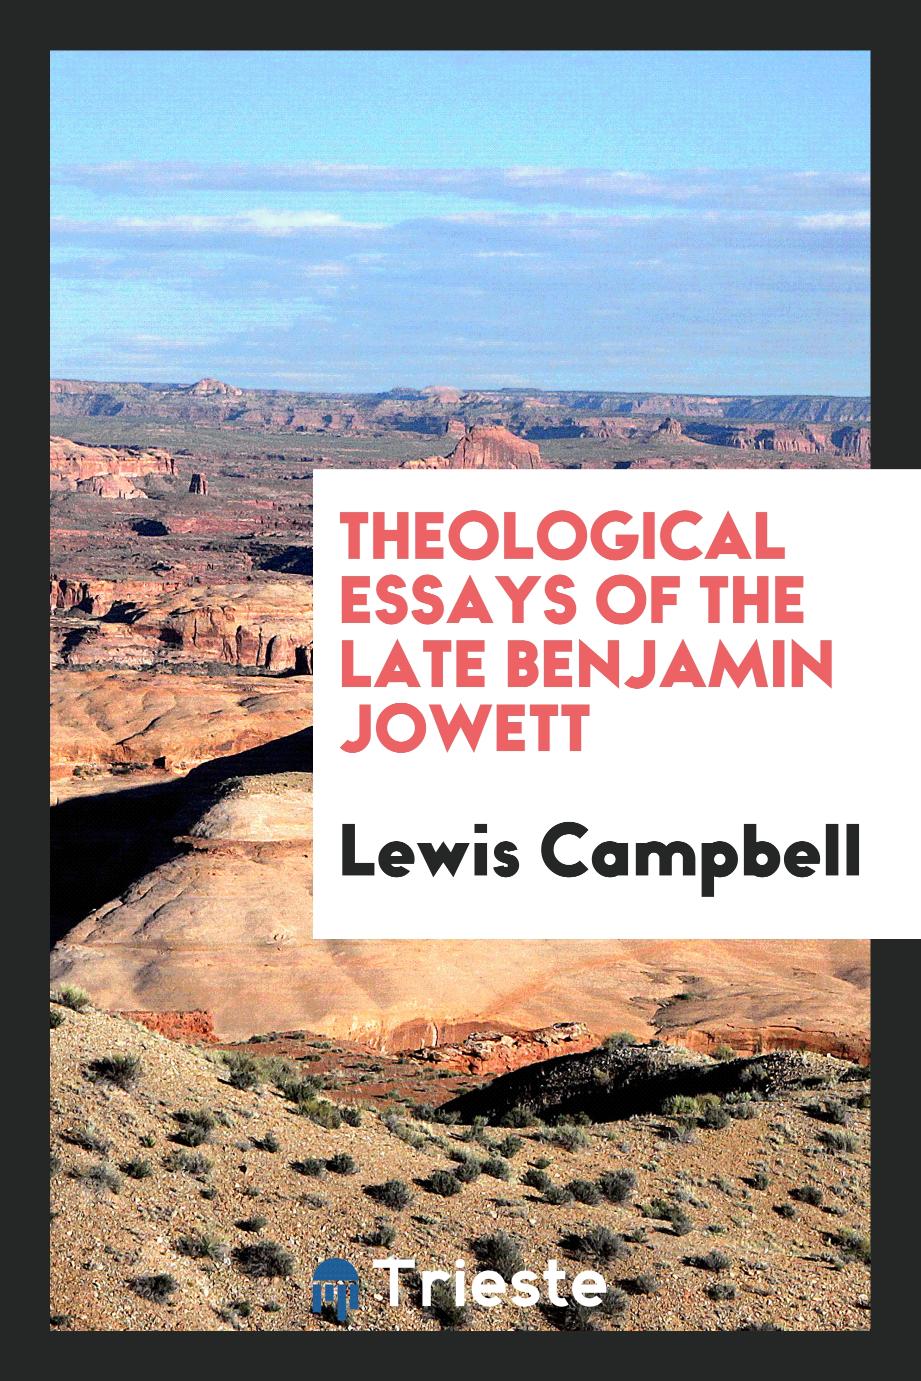 Theological essays of the late Benjamin Jowett